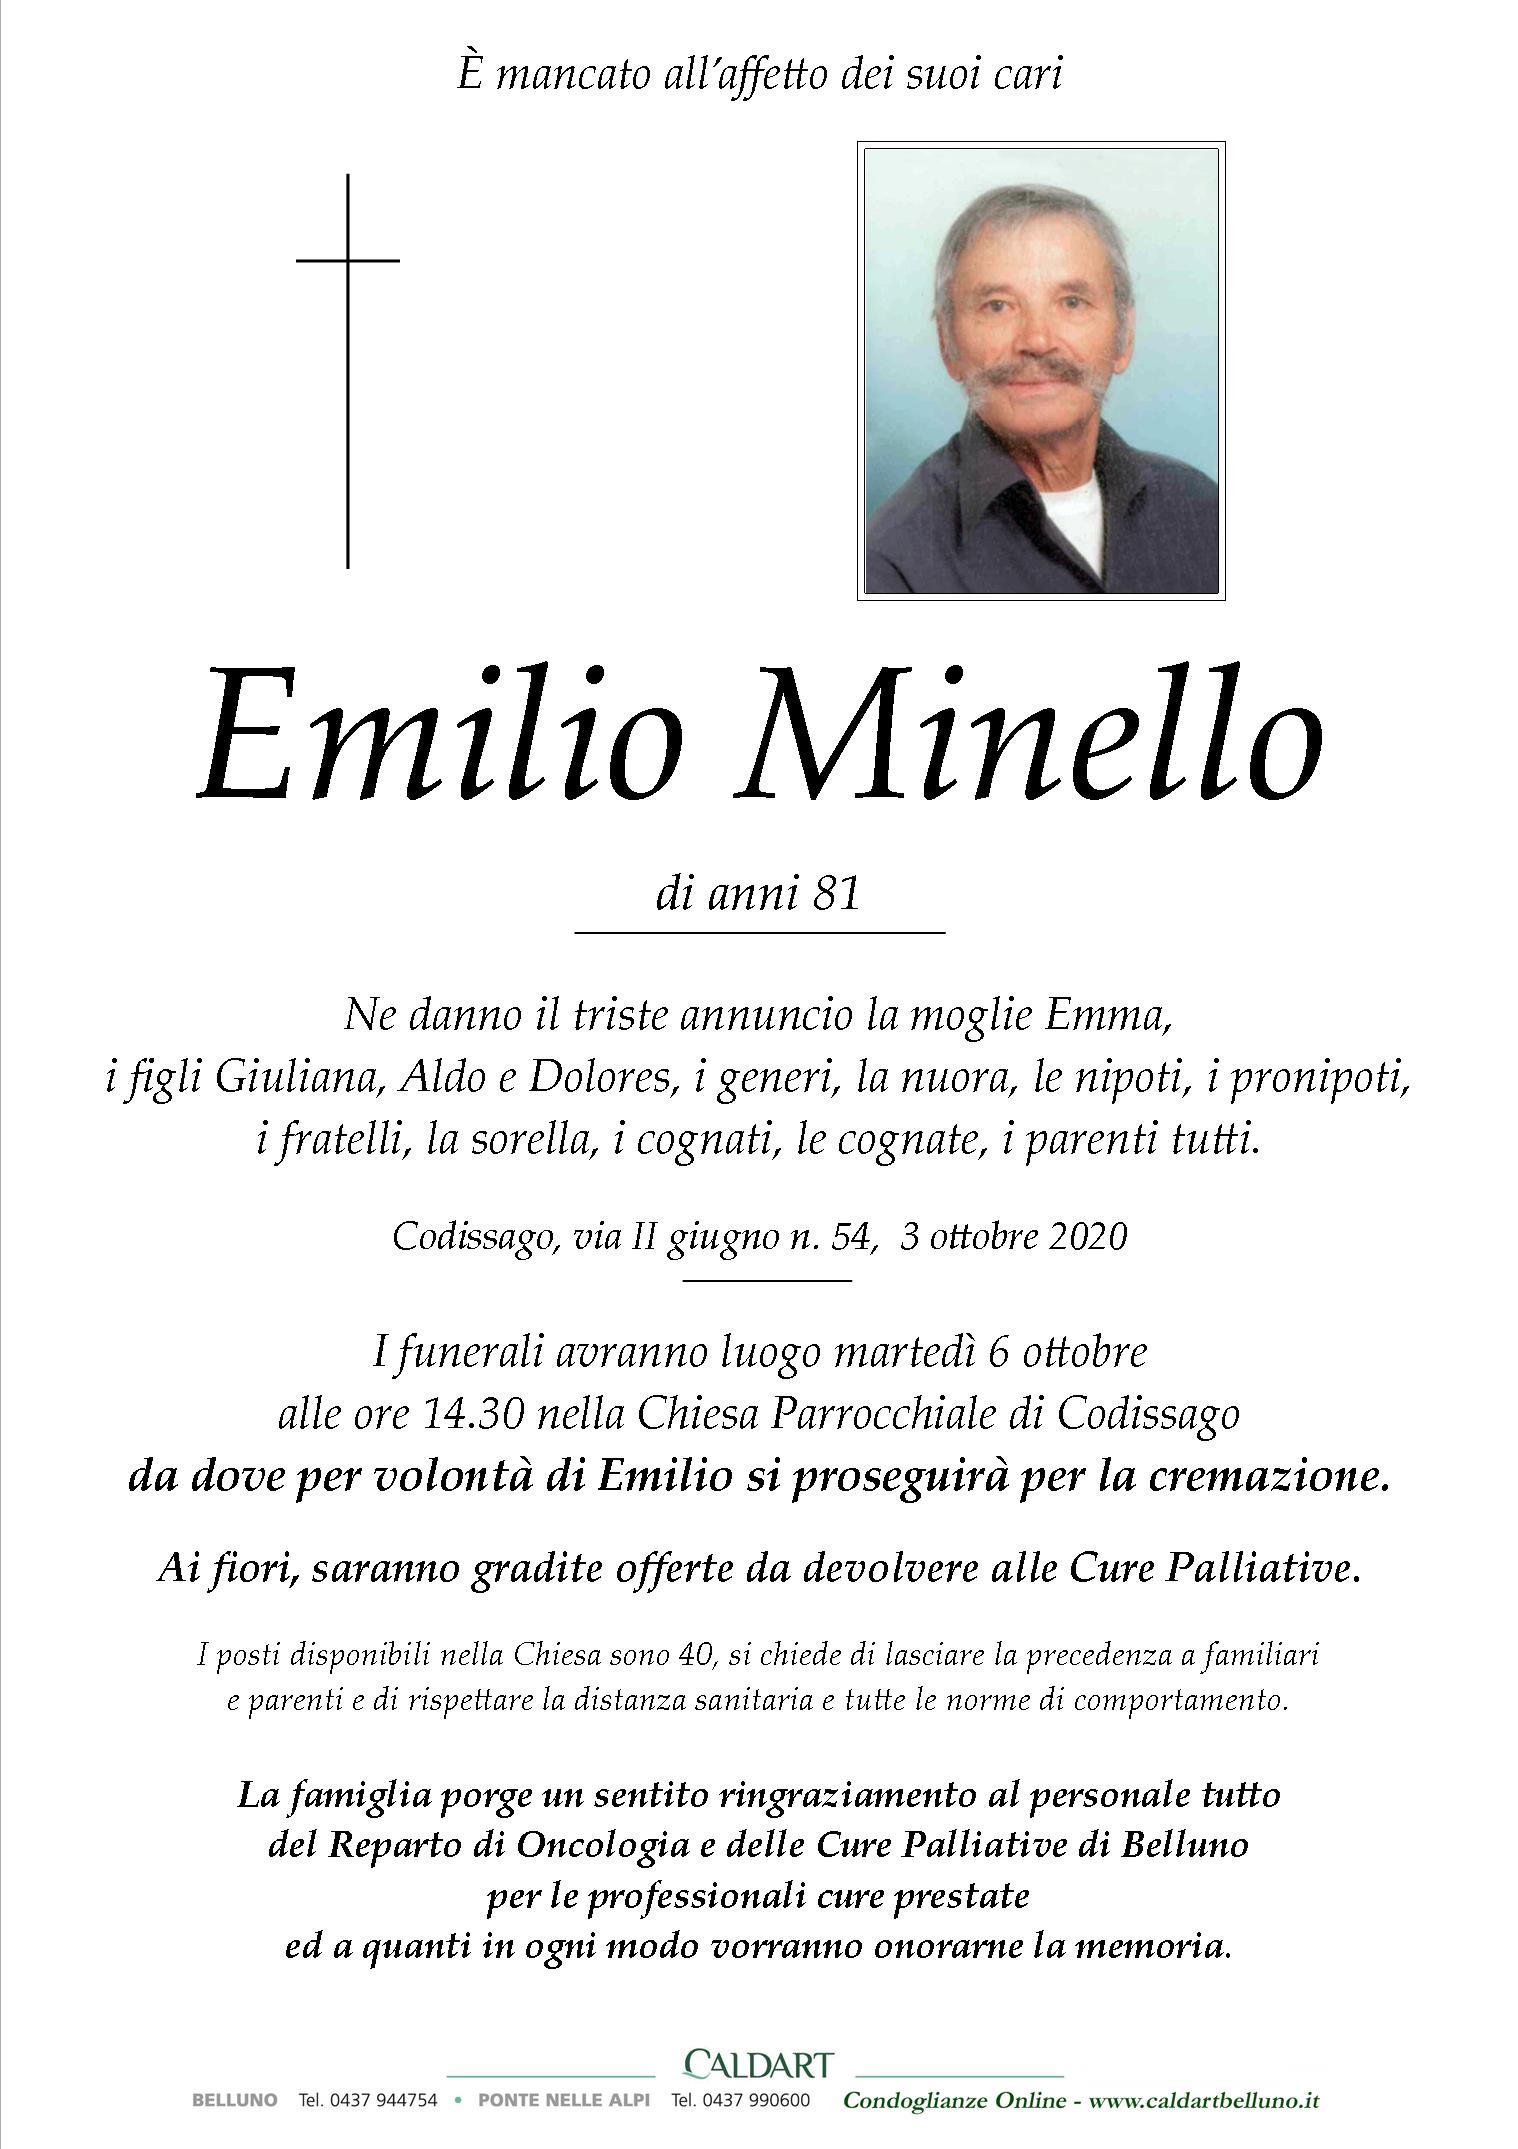 Minello Emilio